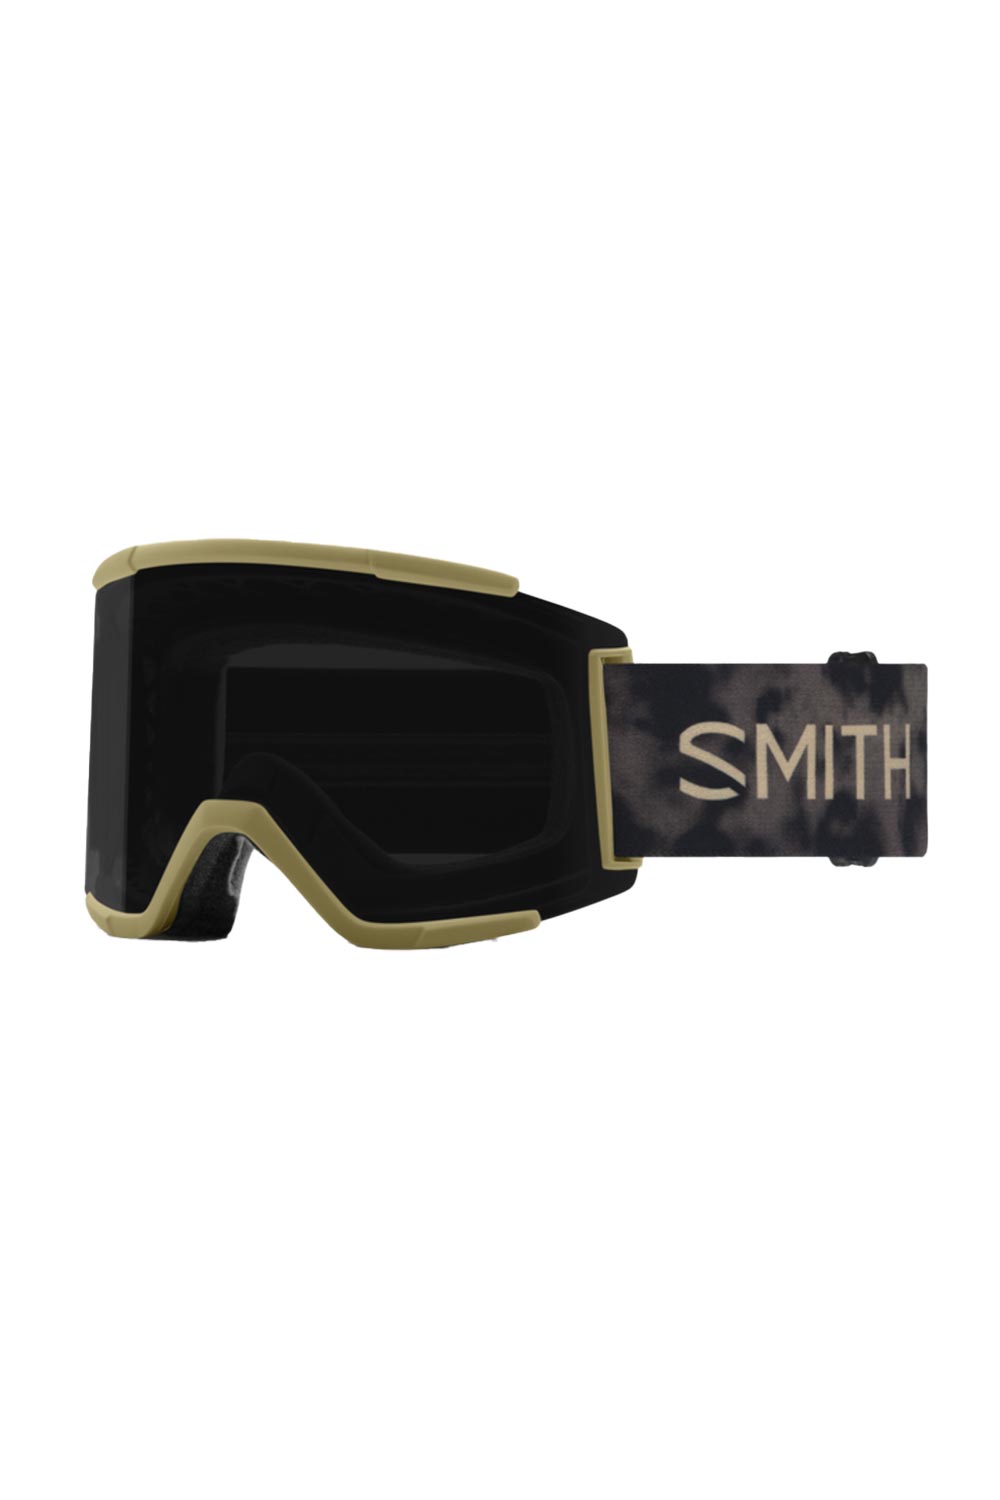 Smith Squad XL ski goggles, Sand frame black lens